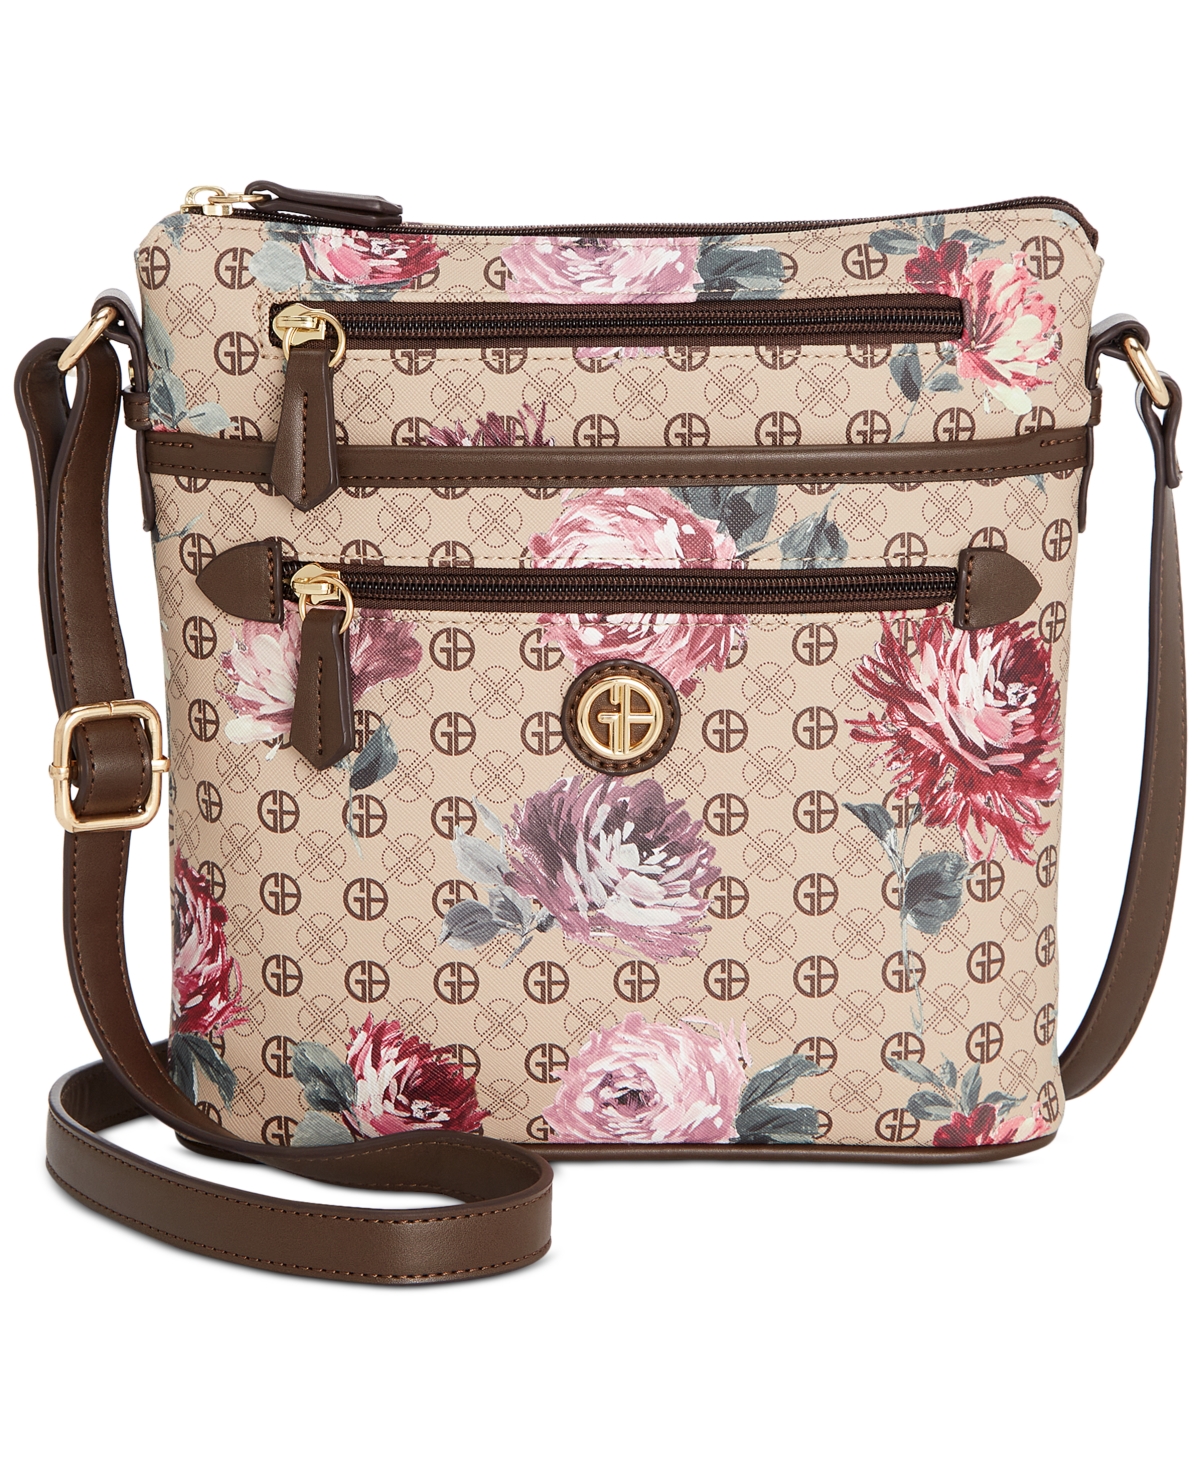 Giani Bernini handbag floral